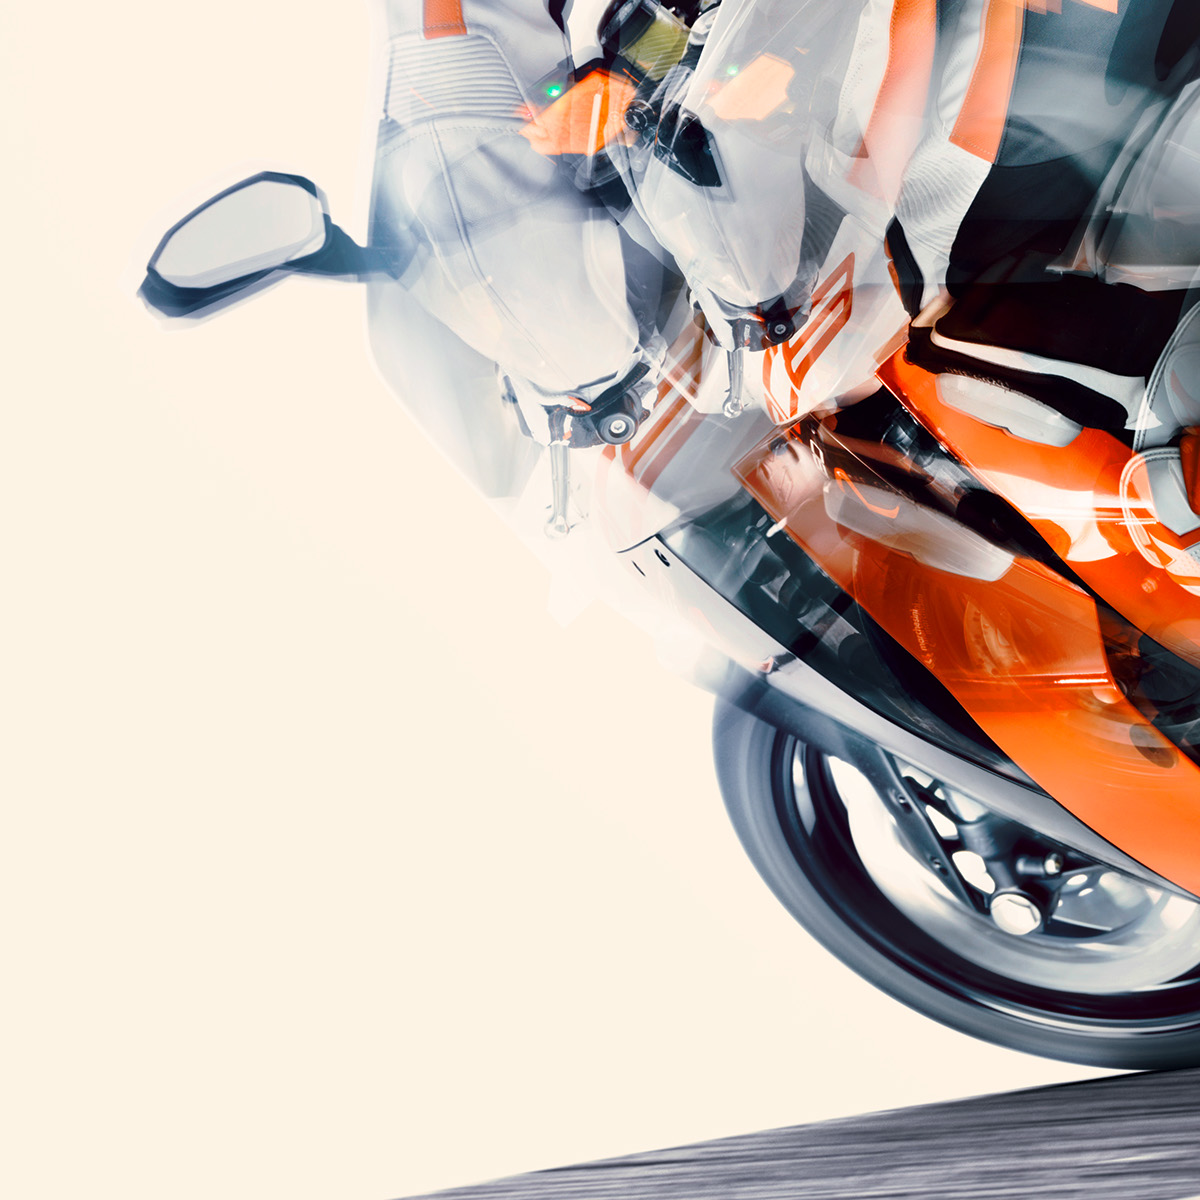 rene neumann transportation motorbike motorcycle Racing graphics White orange look development retouch CGI grading Illustrative motion look